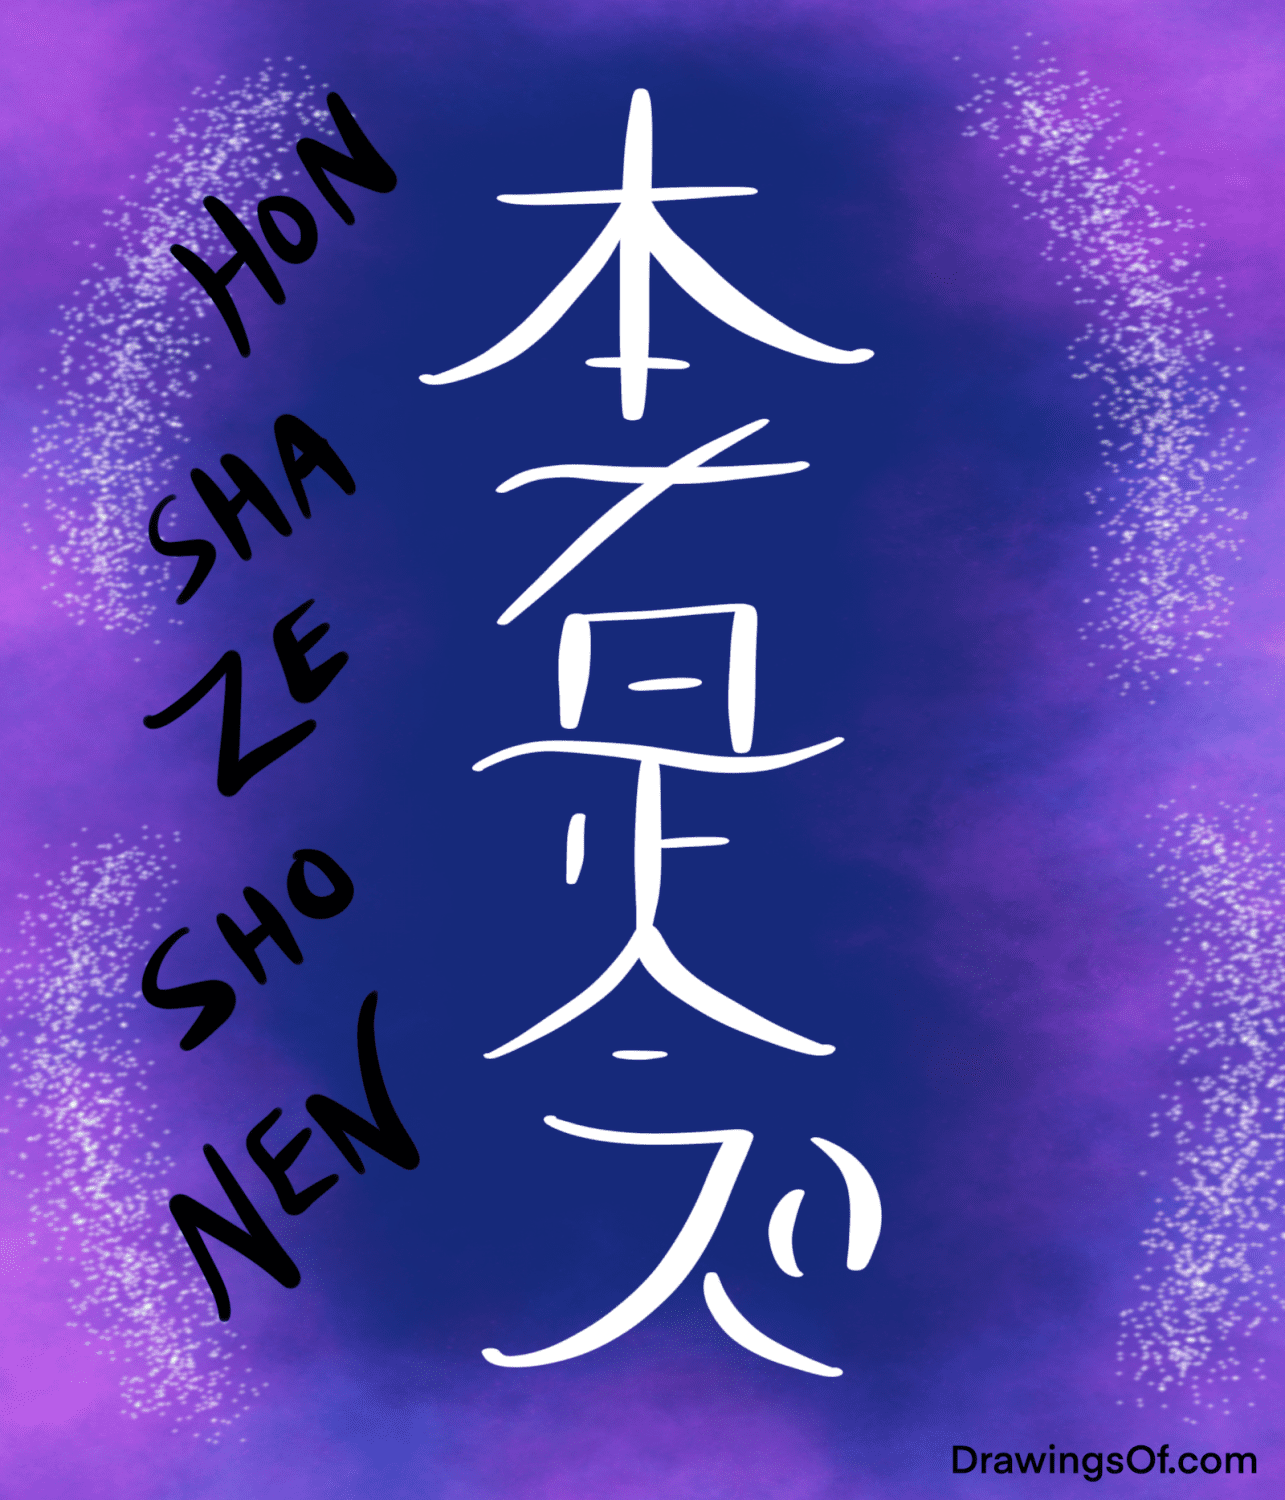 Hon Sha Ze Sho Nen Reiki symbol